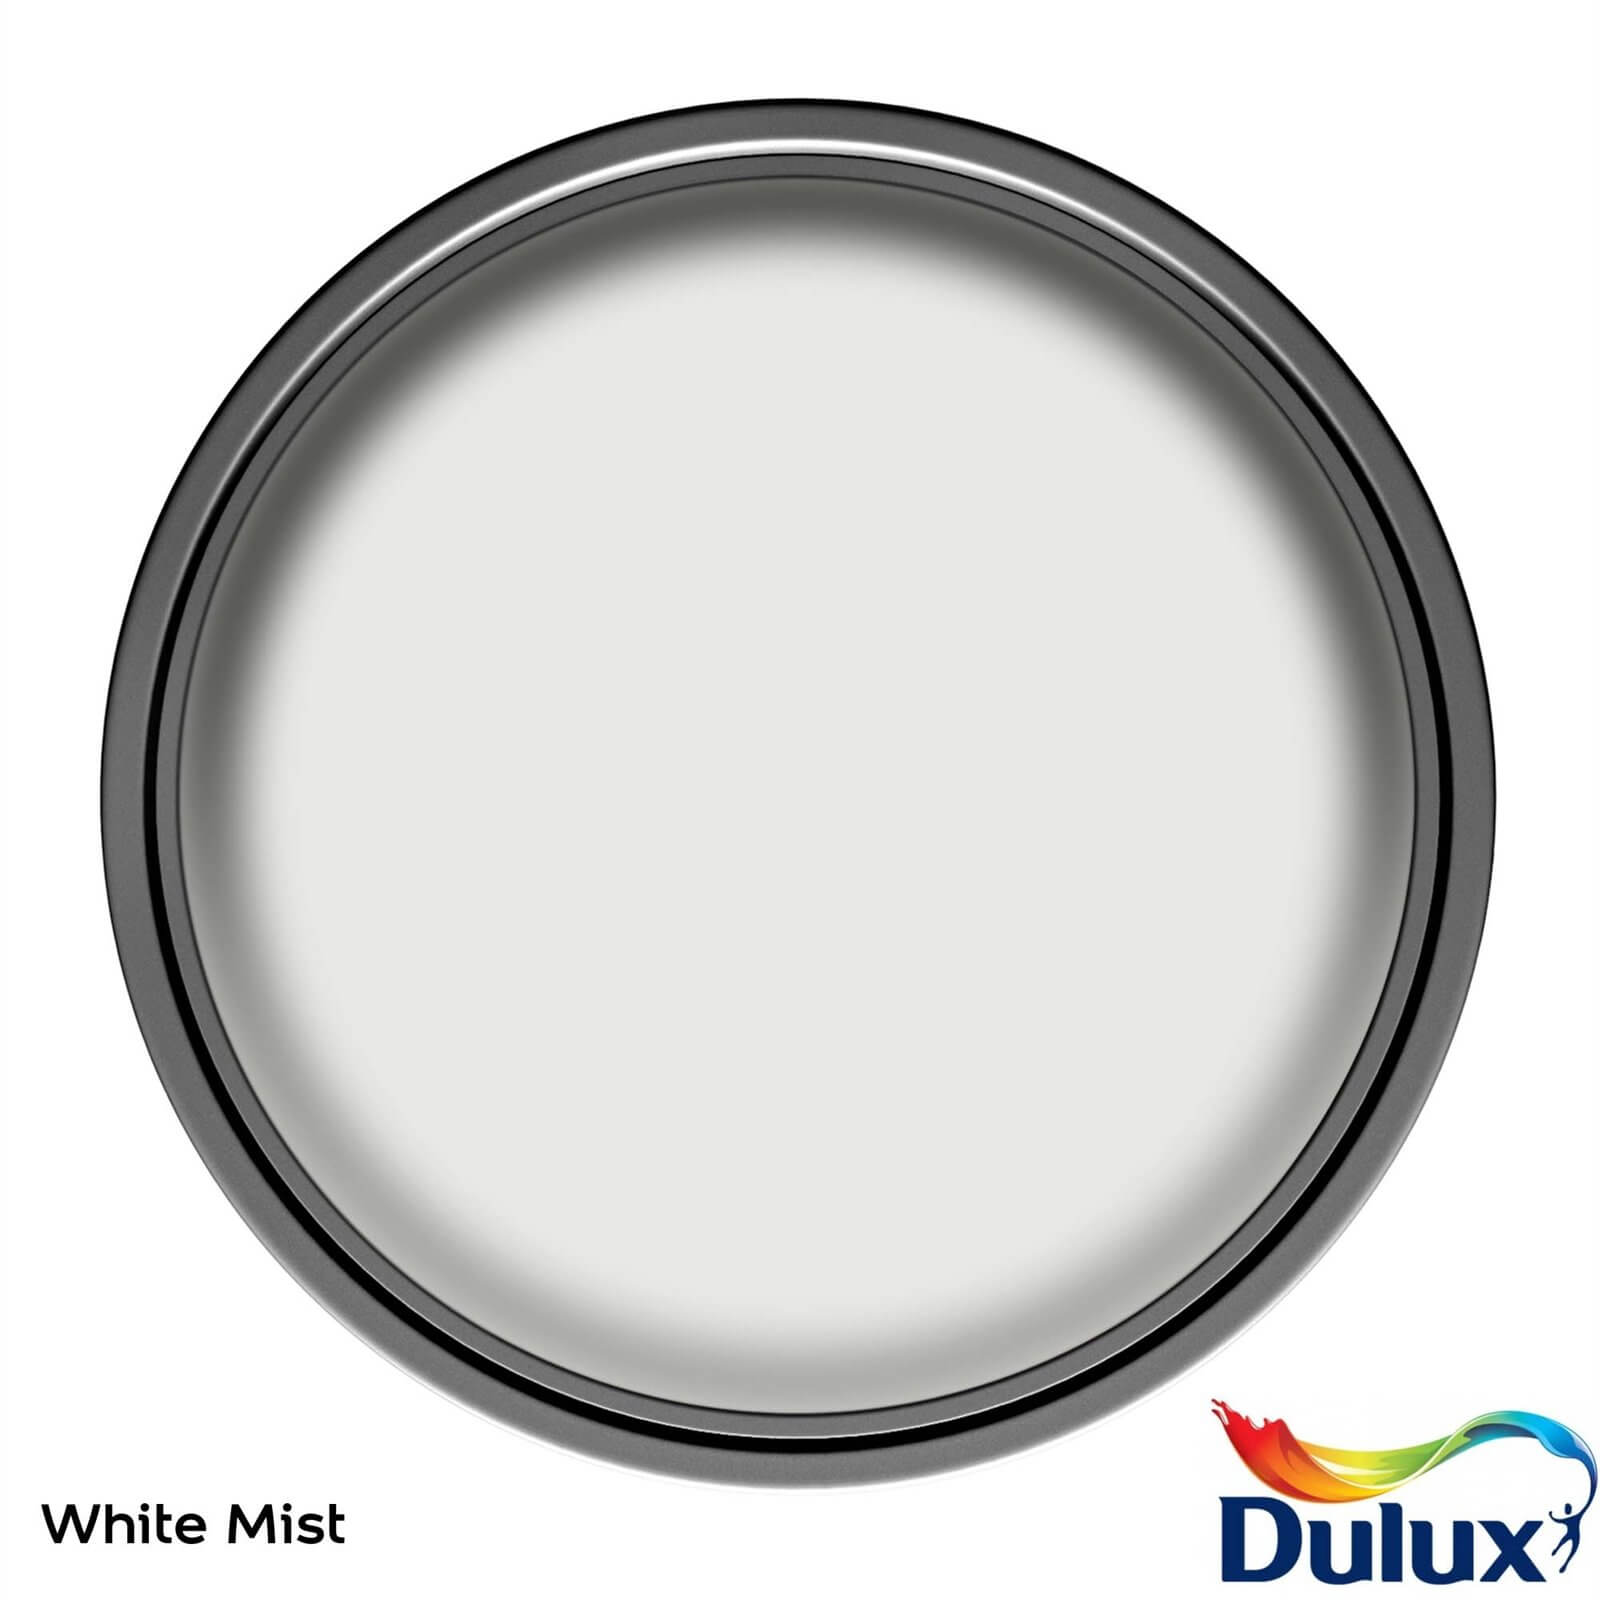 Dulux Matt Emulsion Paint White Mist - 2.5L